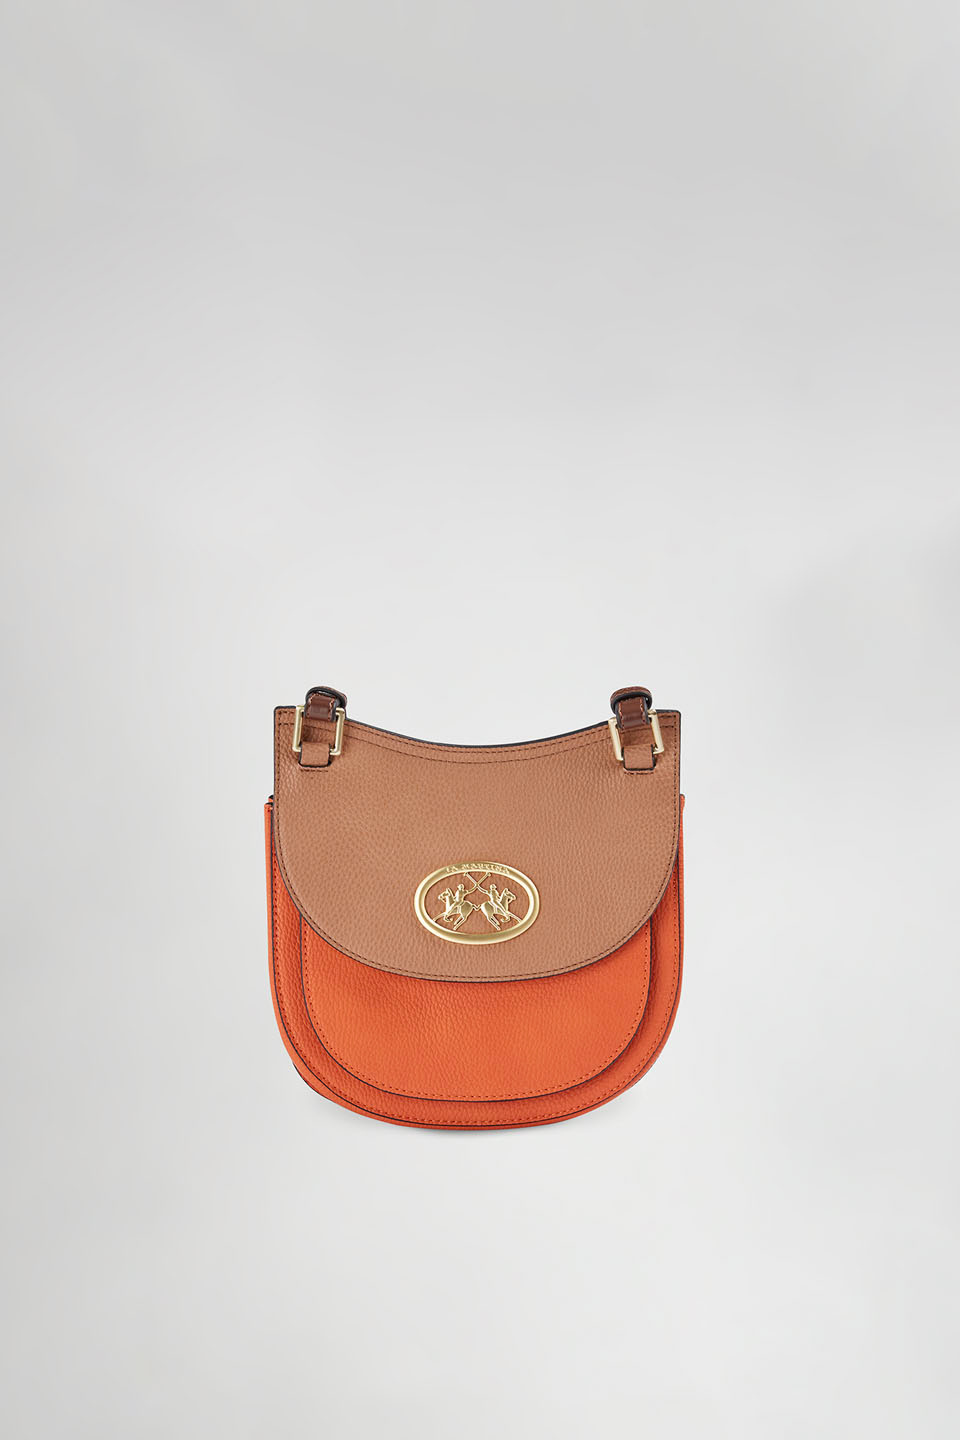 PU leather bag - La Martina - Official Online Shop